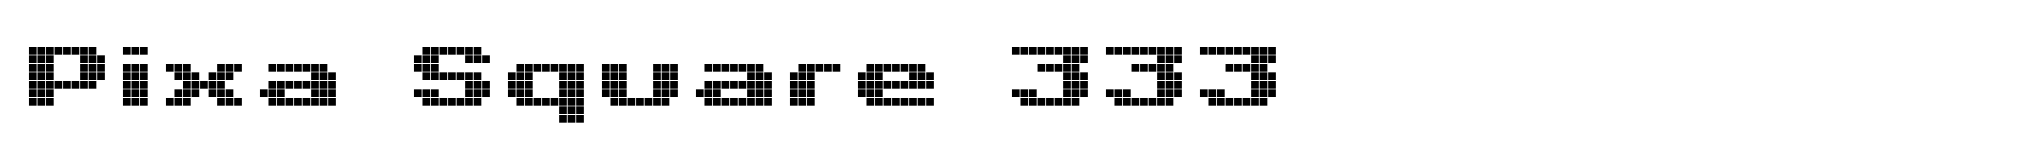 Pixa Square 333 image